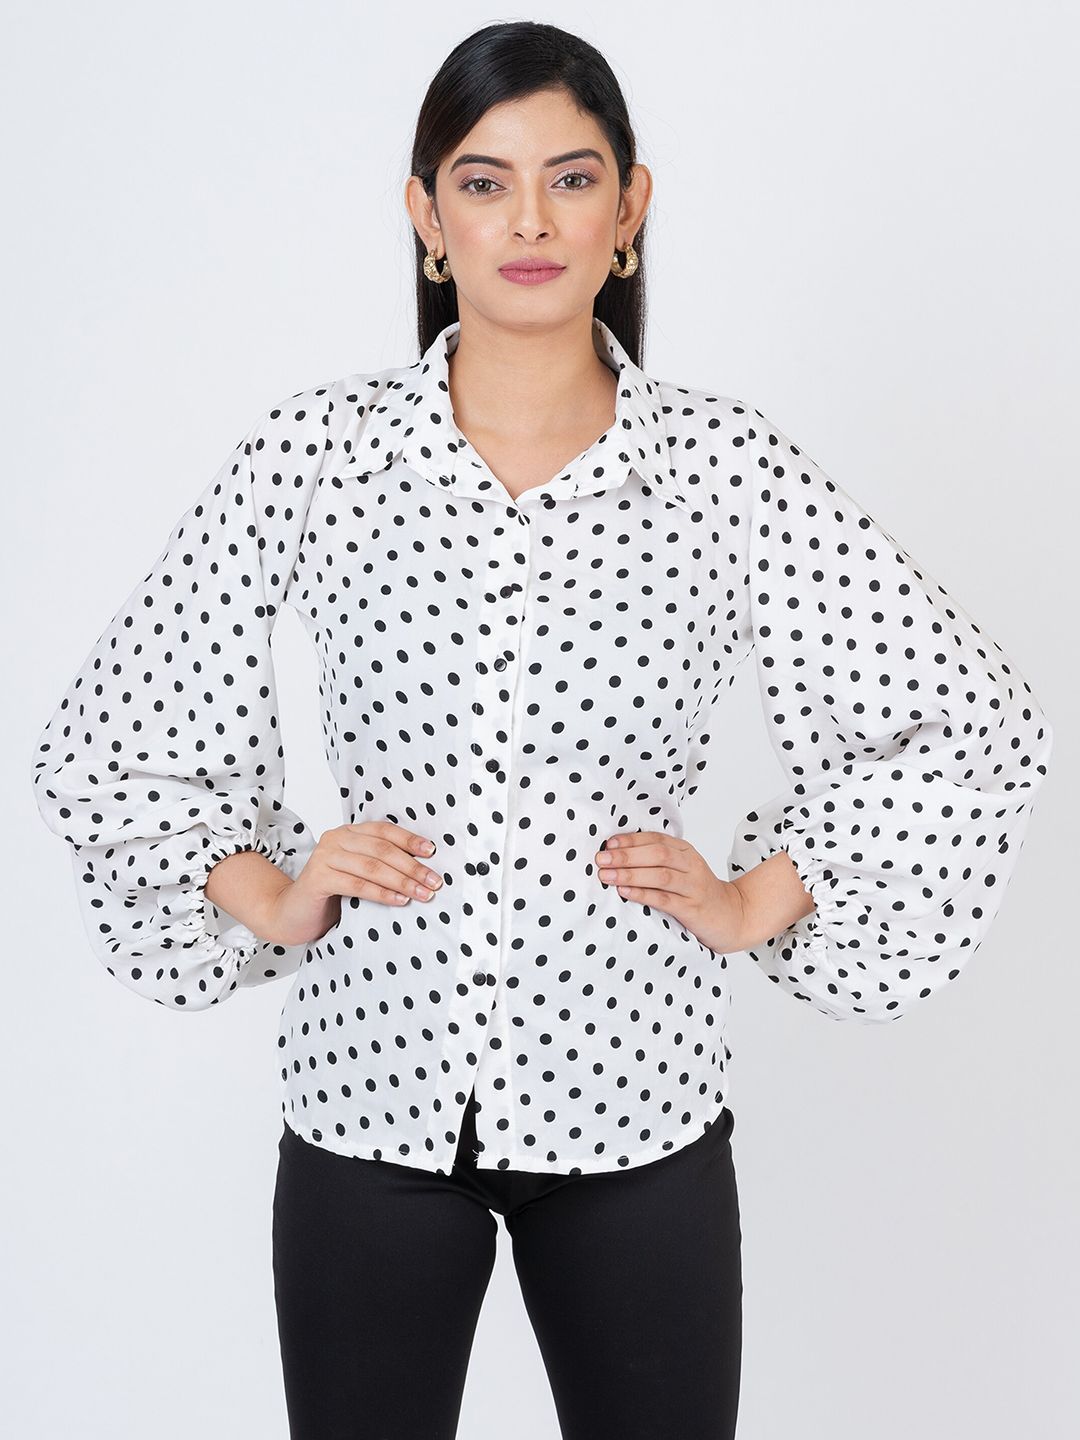 KAMPHIRE Polka Dot Printed Bishop Sleeve Shirt Style Top Price in India